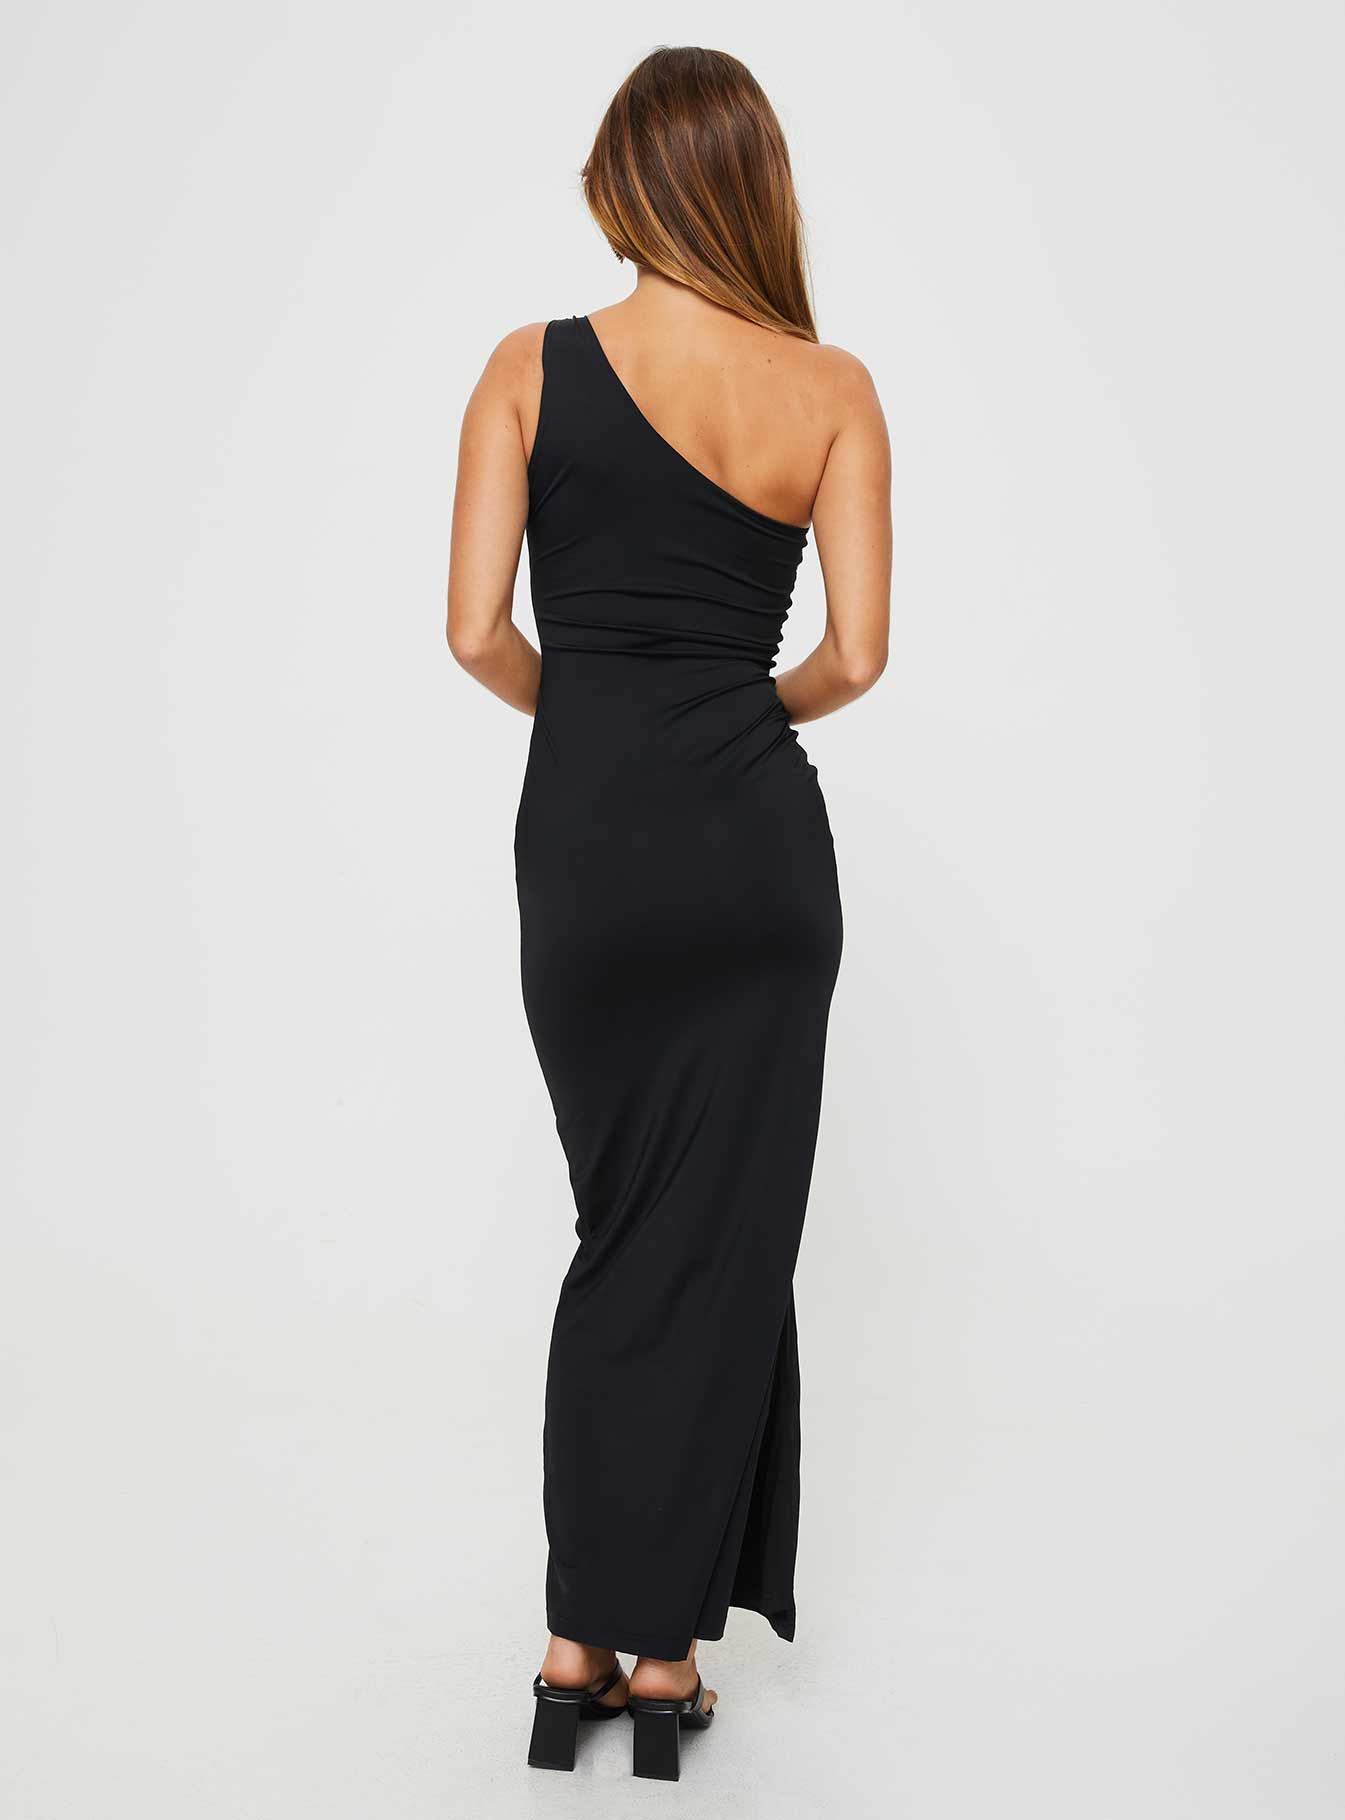 Shop Formal Dress Black Dress Maxi Toomba